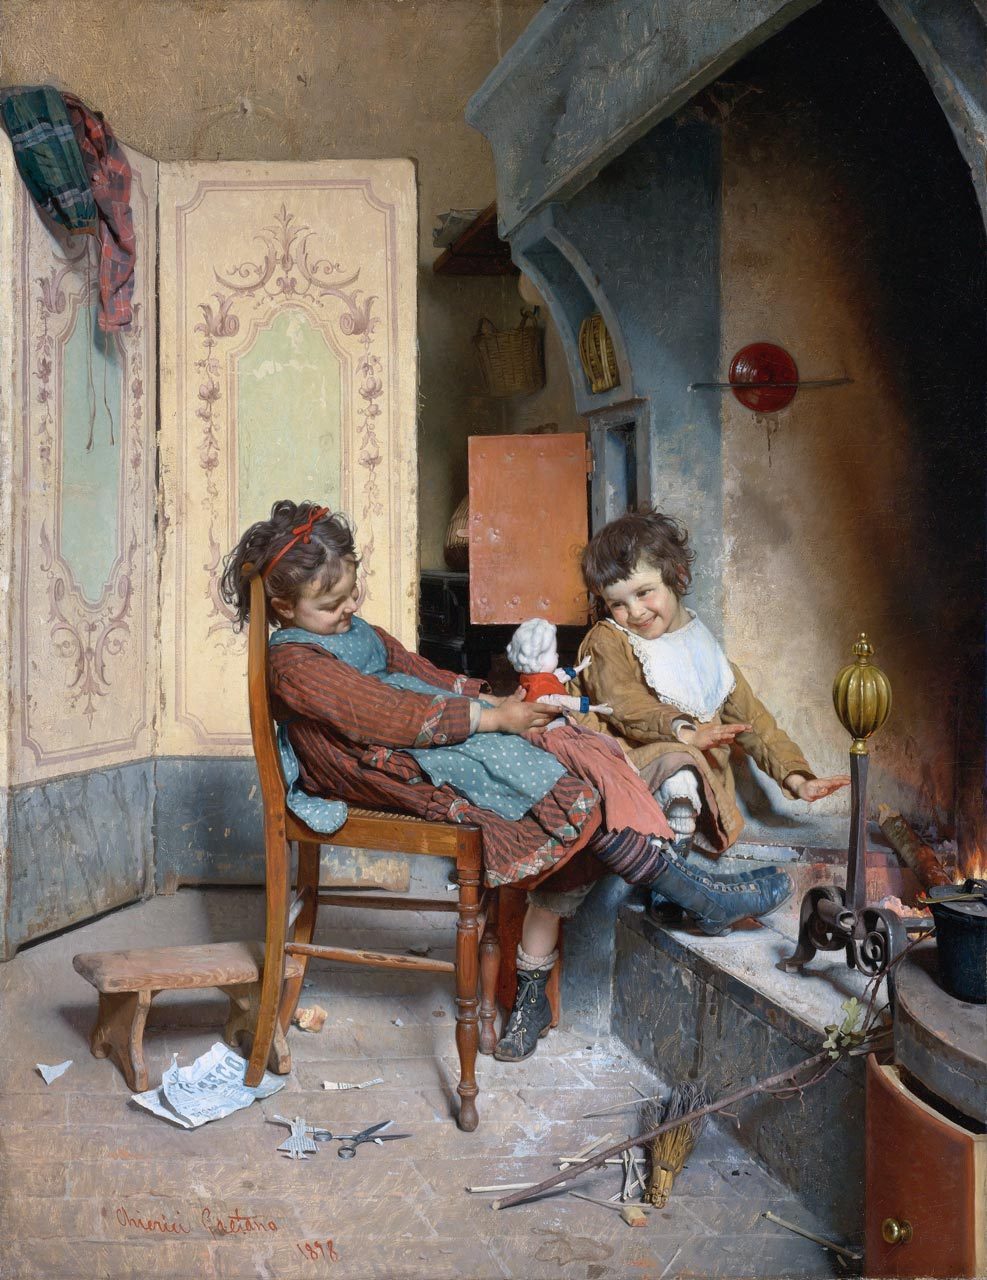 Gaetano Chierici - Joys of Childhood (1878)